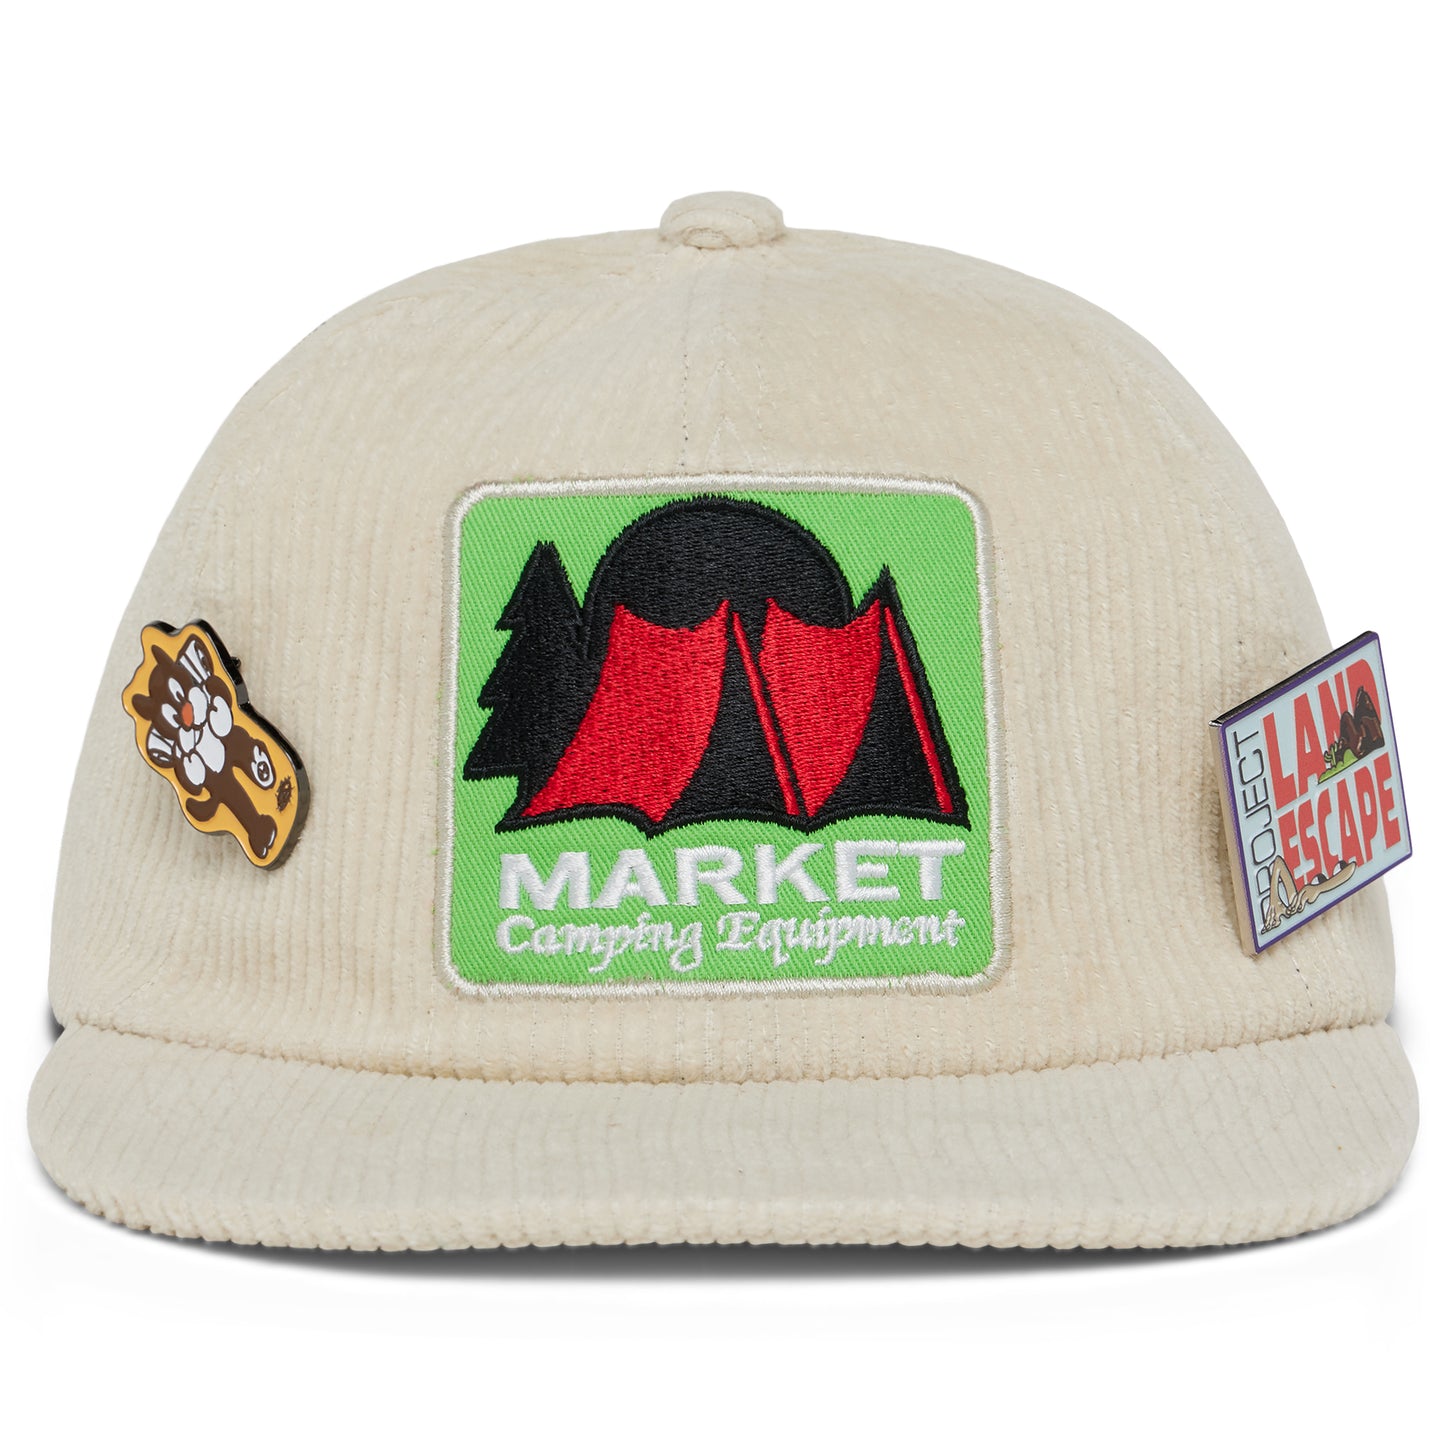 Market clothing brand corduroy snapback hat 